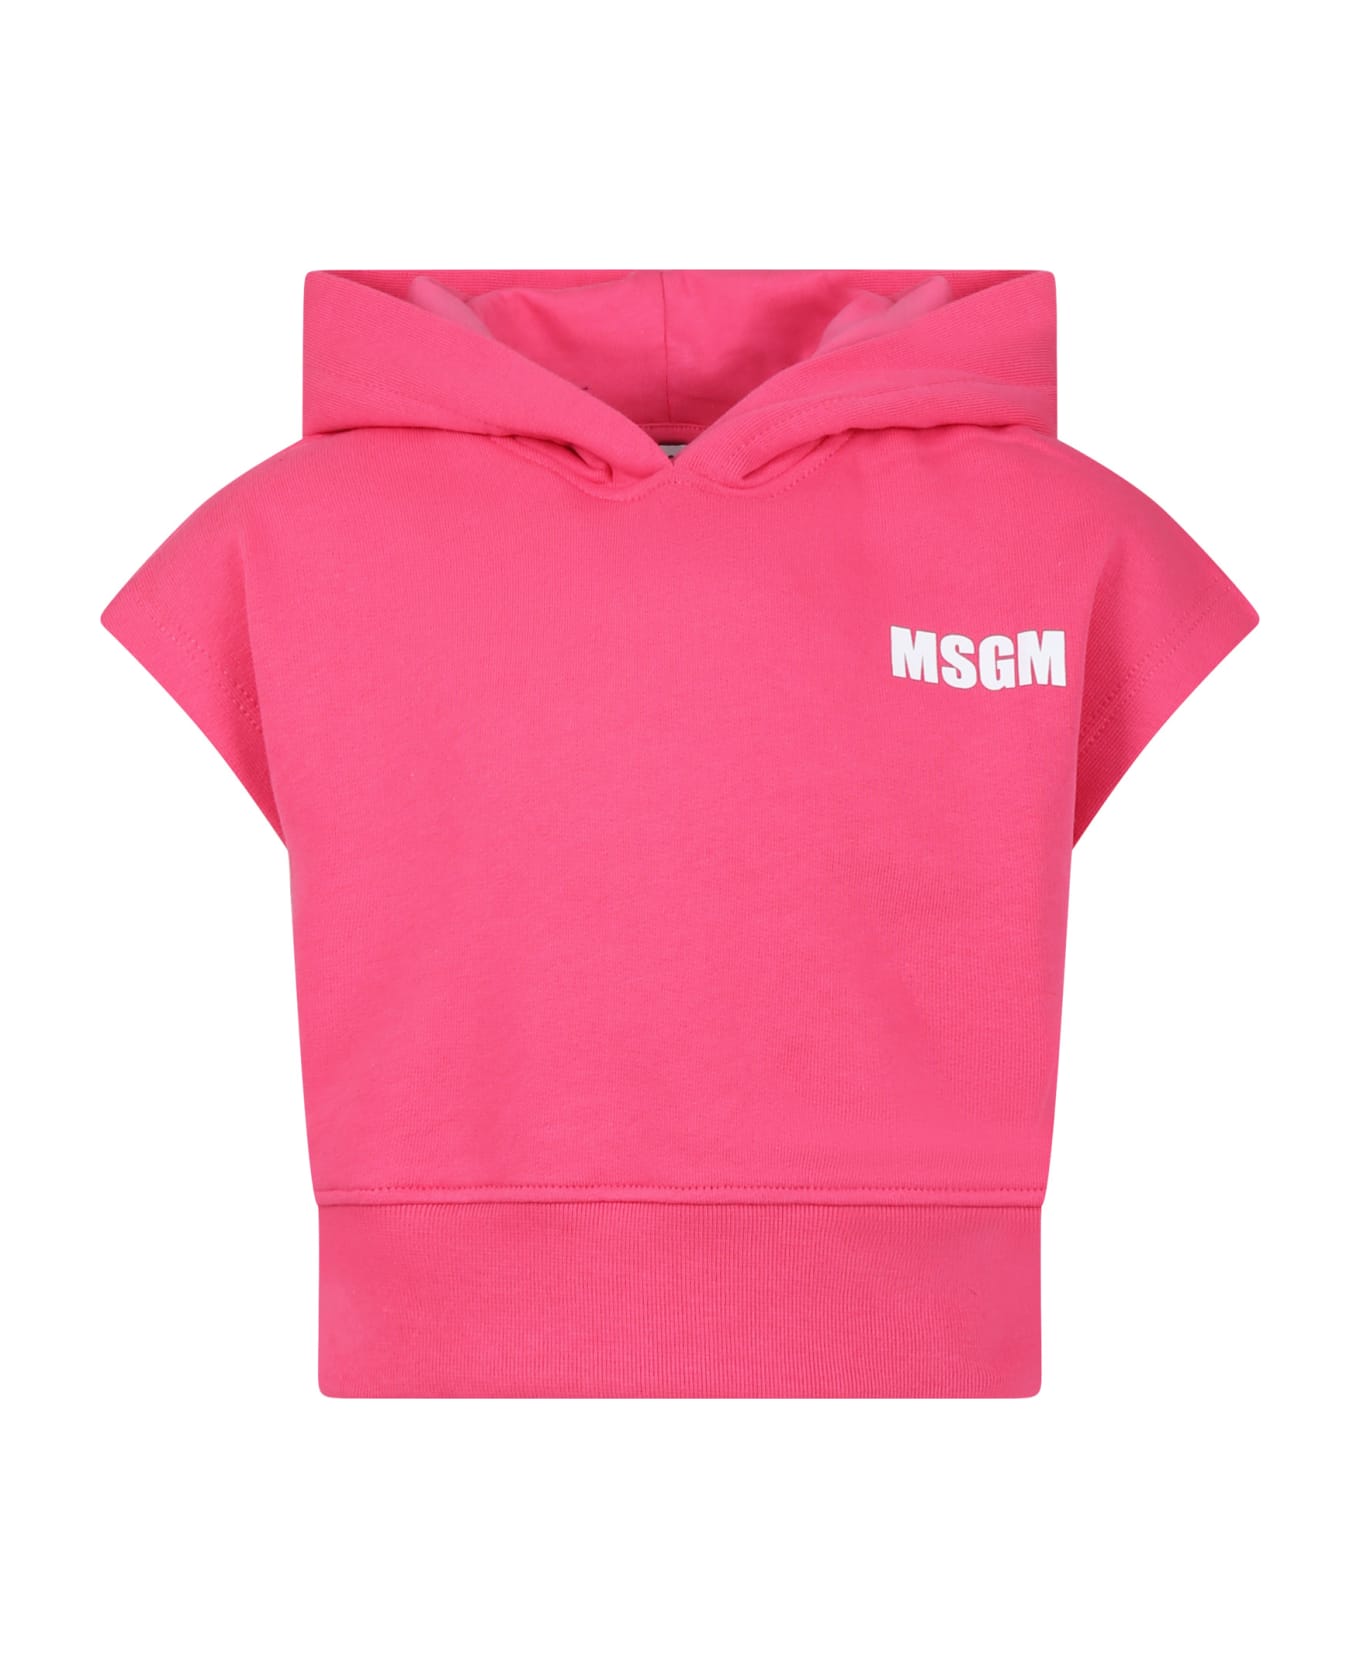 MSGM Fuchsia Sweatshirt For Girl With Logo And Writing - Fuchsia ニットウェア＆スウェットシャツ